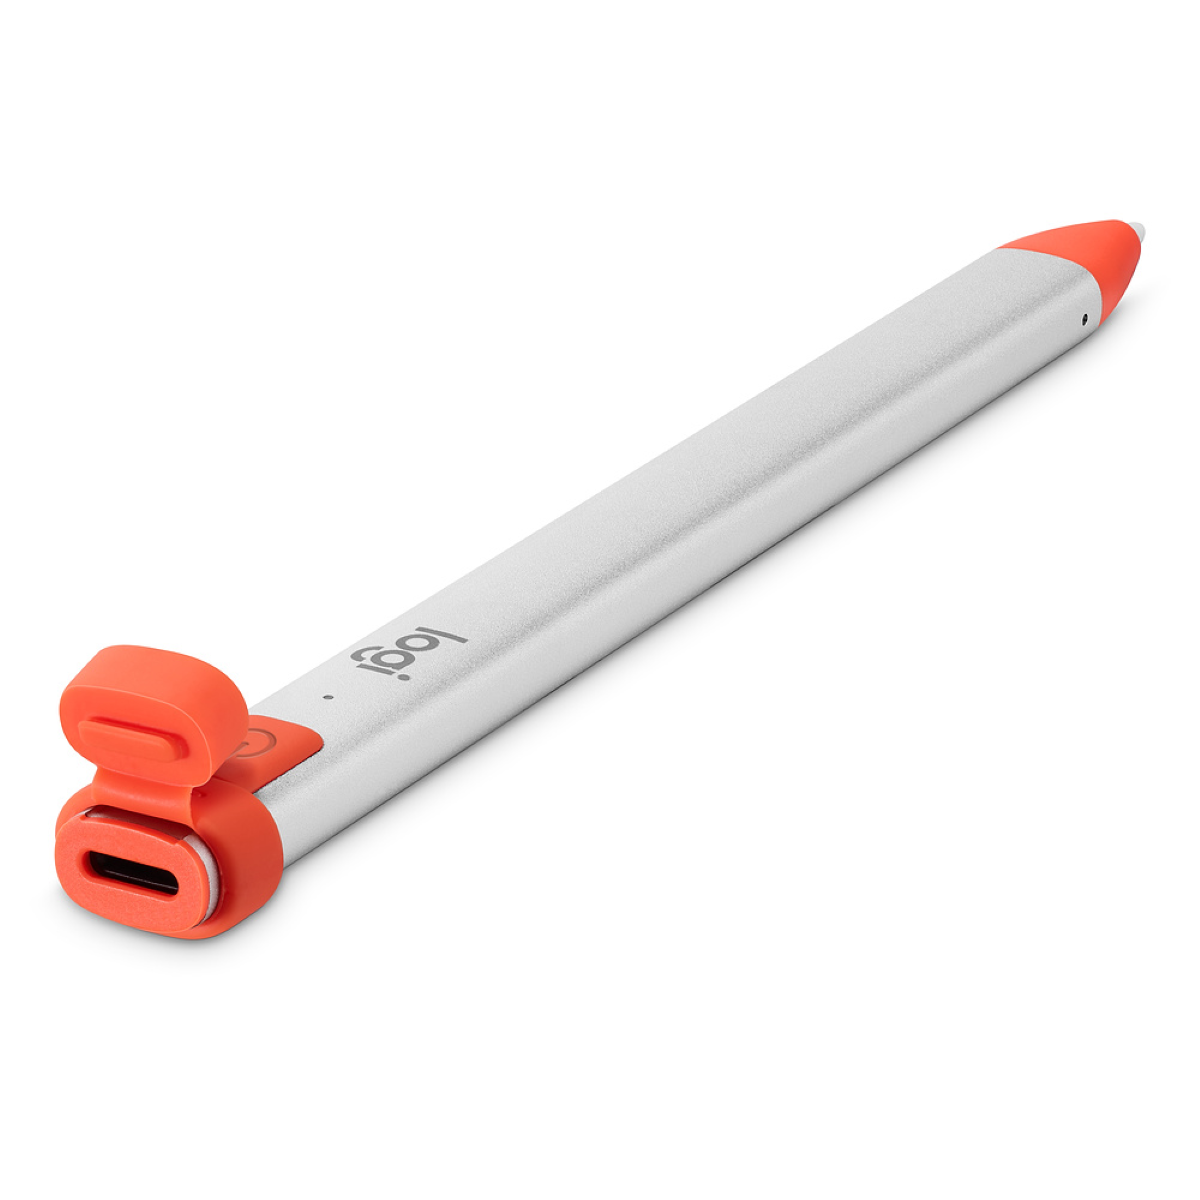 Logitech Crayon Bluetooth Digital Pen - Charging Port